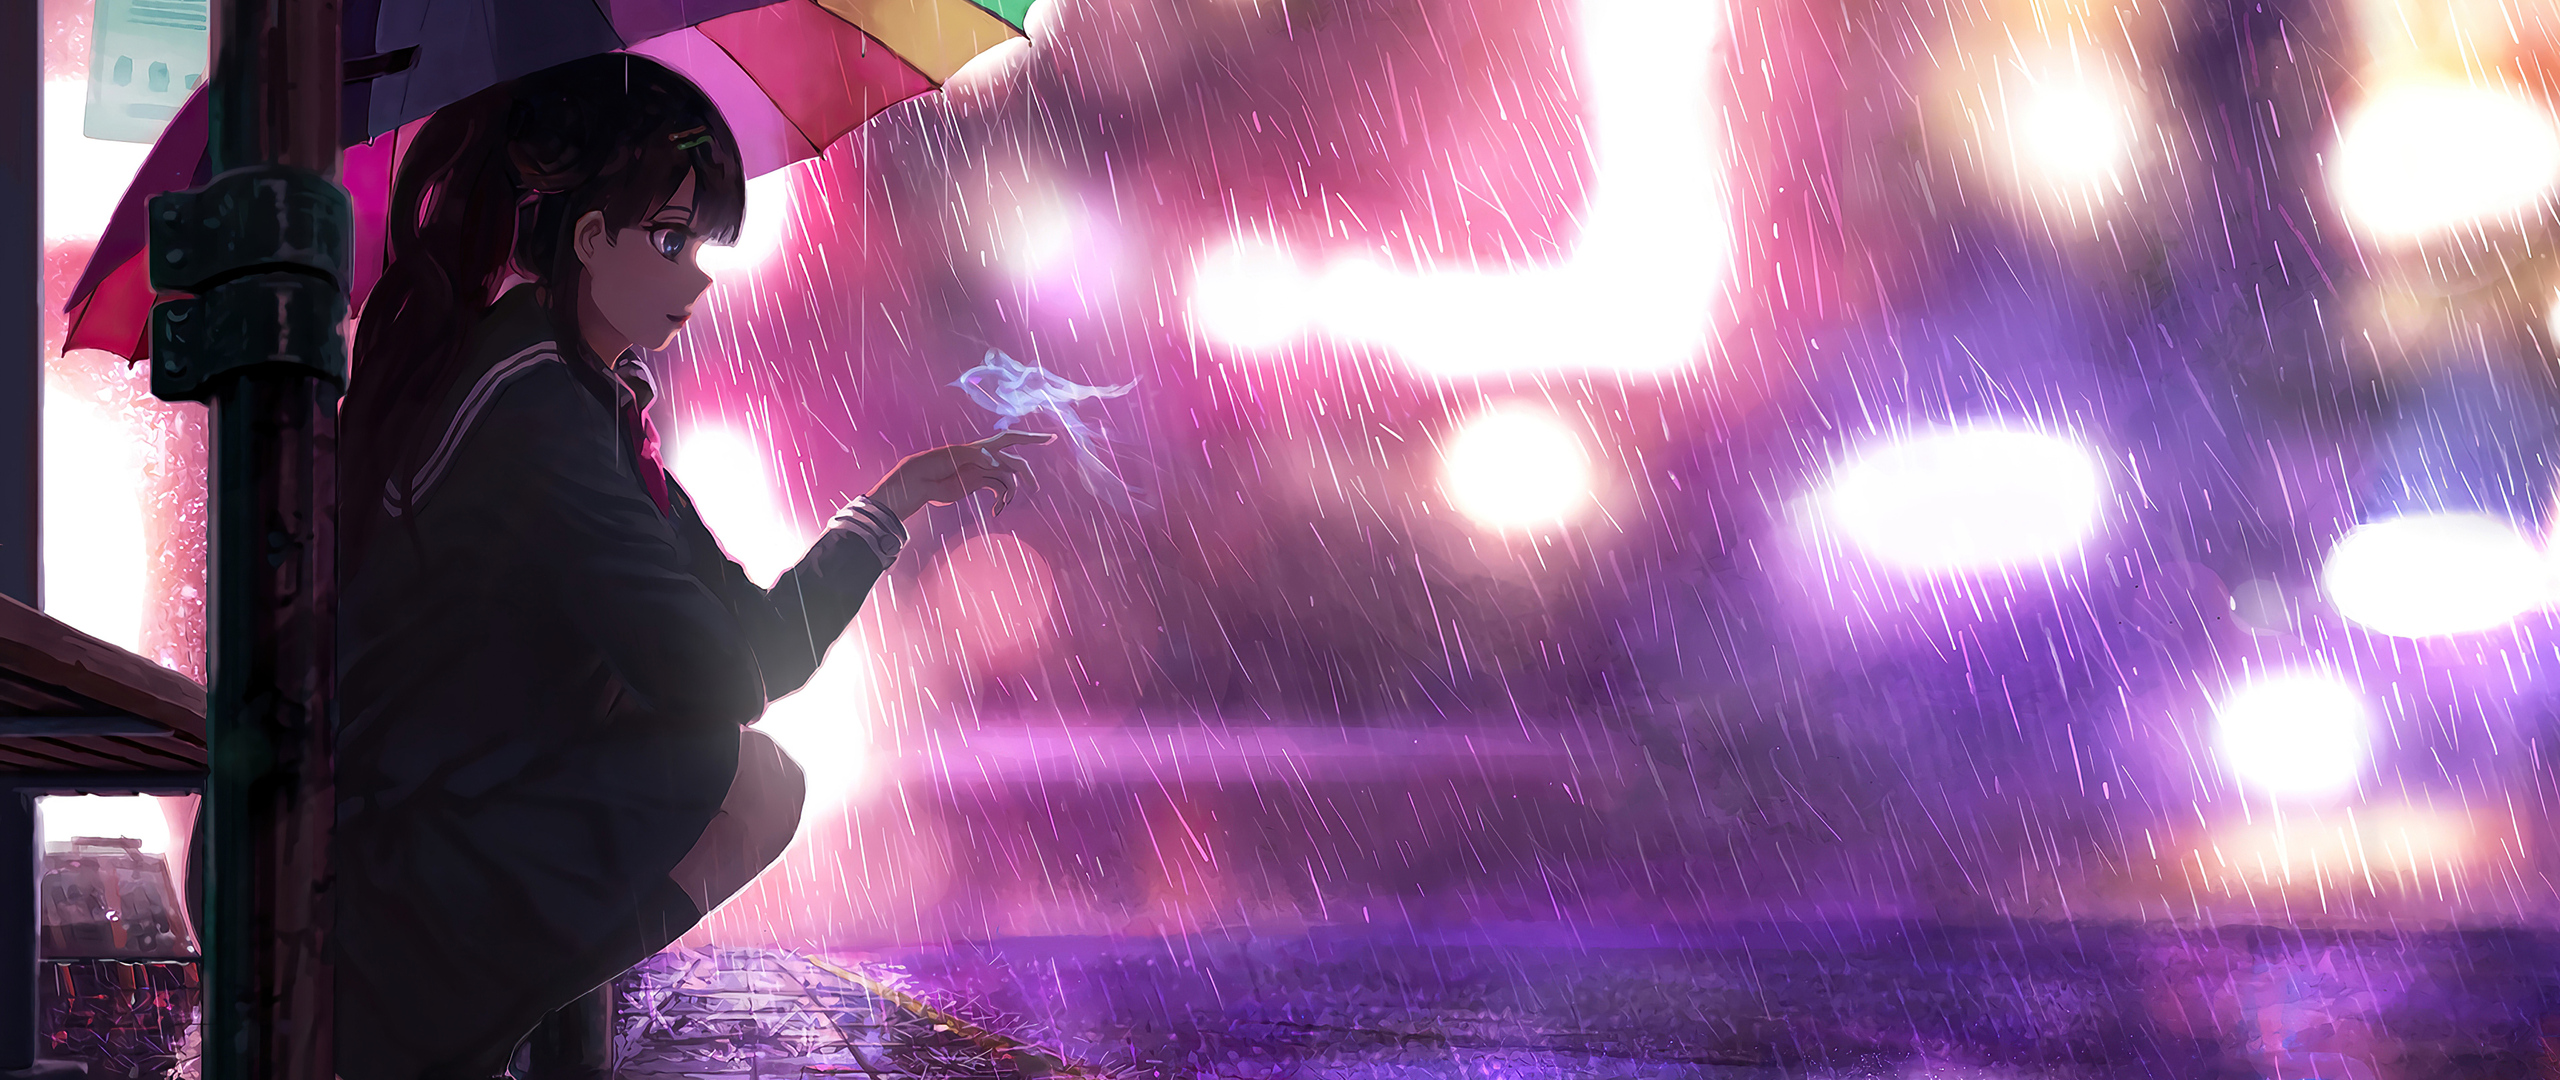 umbrella-rain-anime-girl-4k-rg-2560x1080.jpg